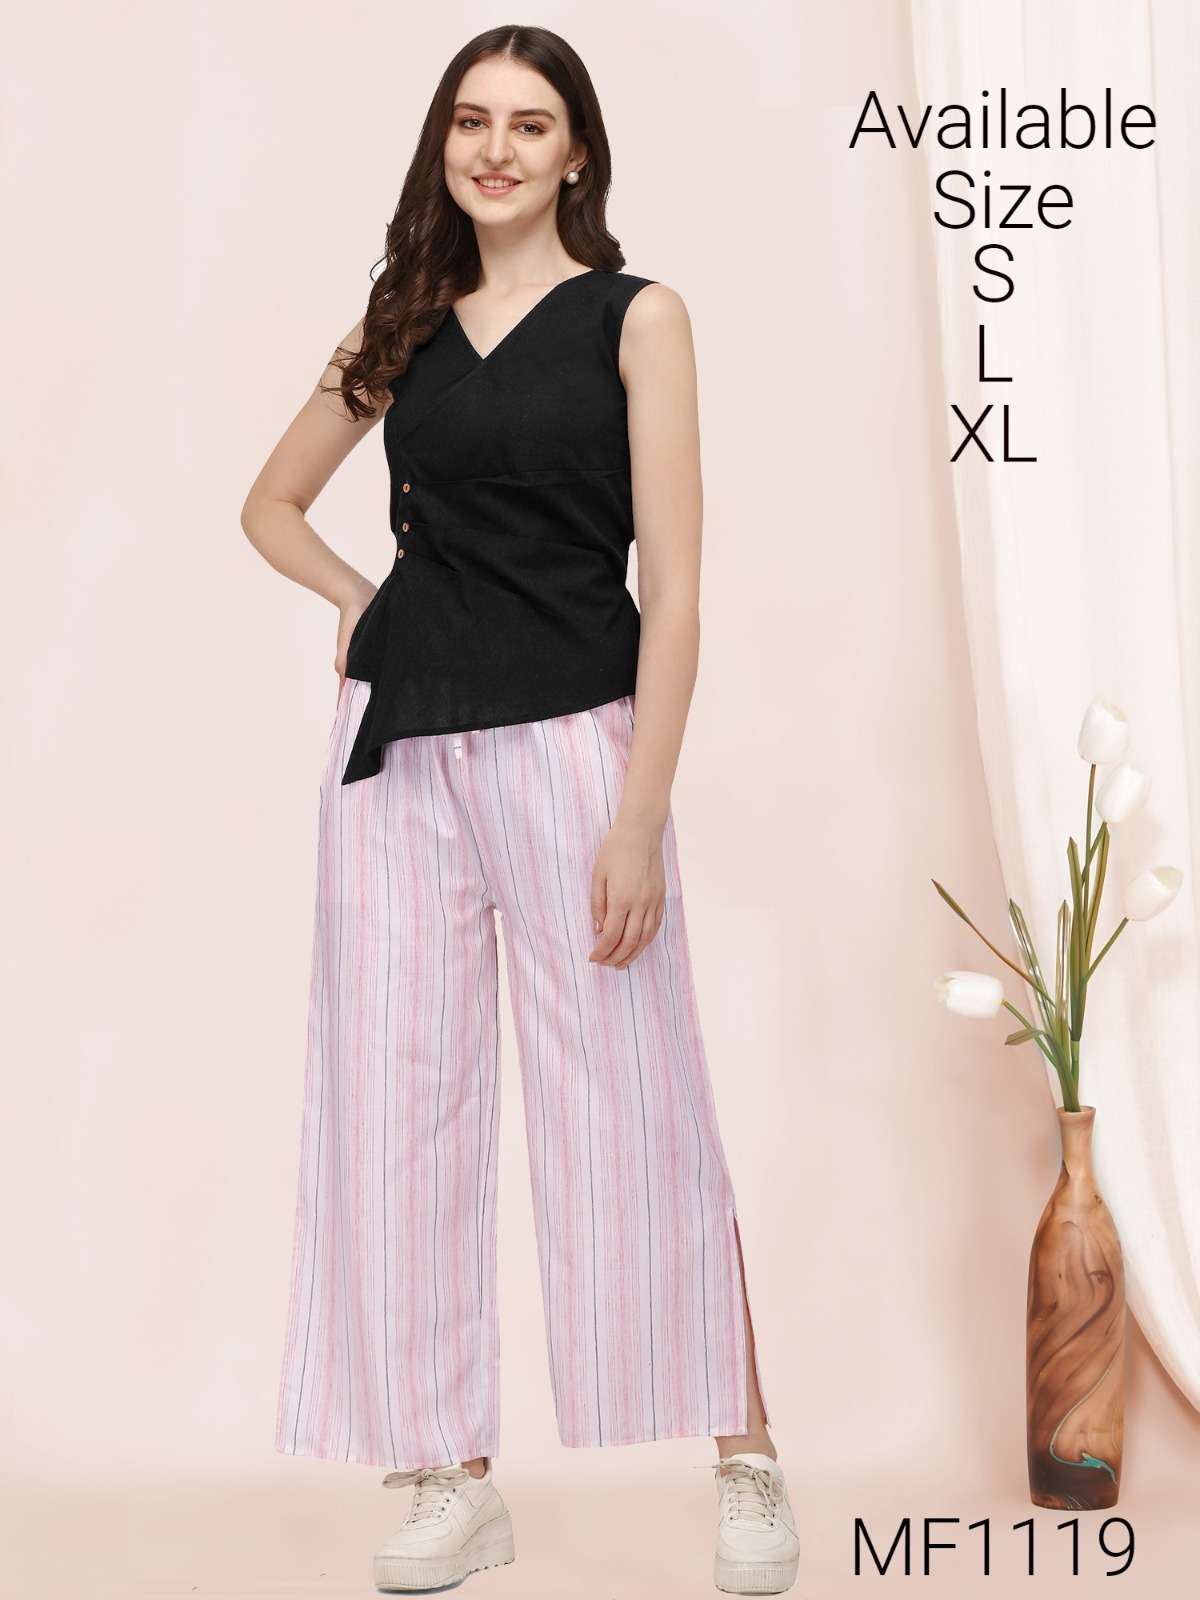 mesmora Restocked 18 khadi pairs khadi cotton top with pant catalog